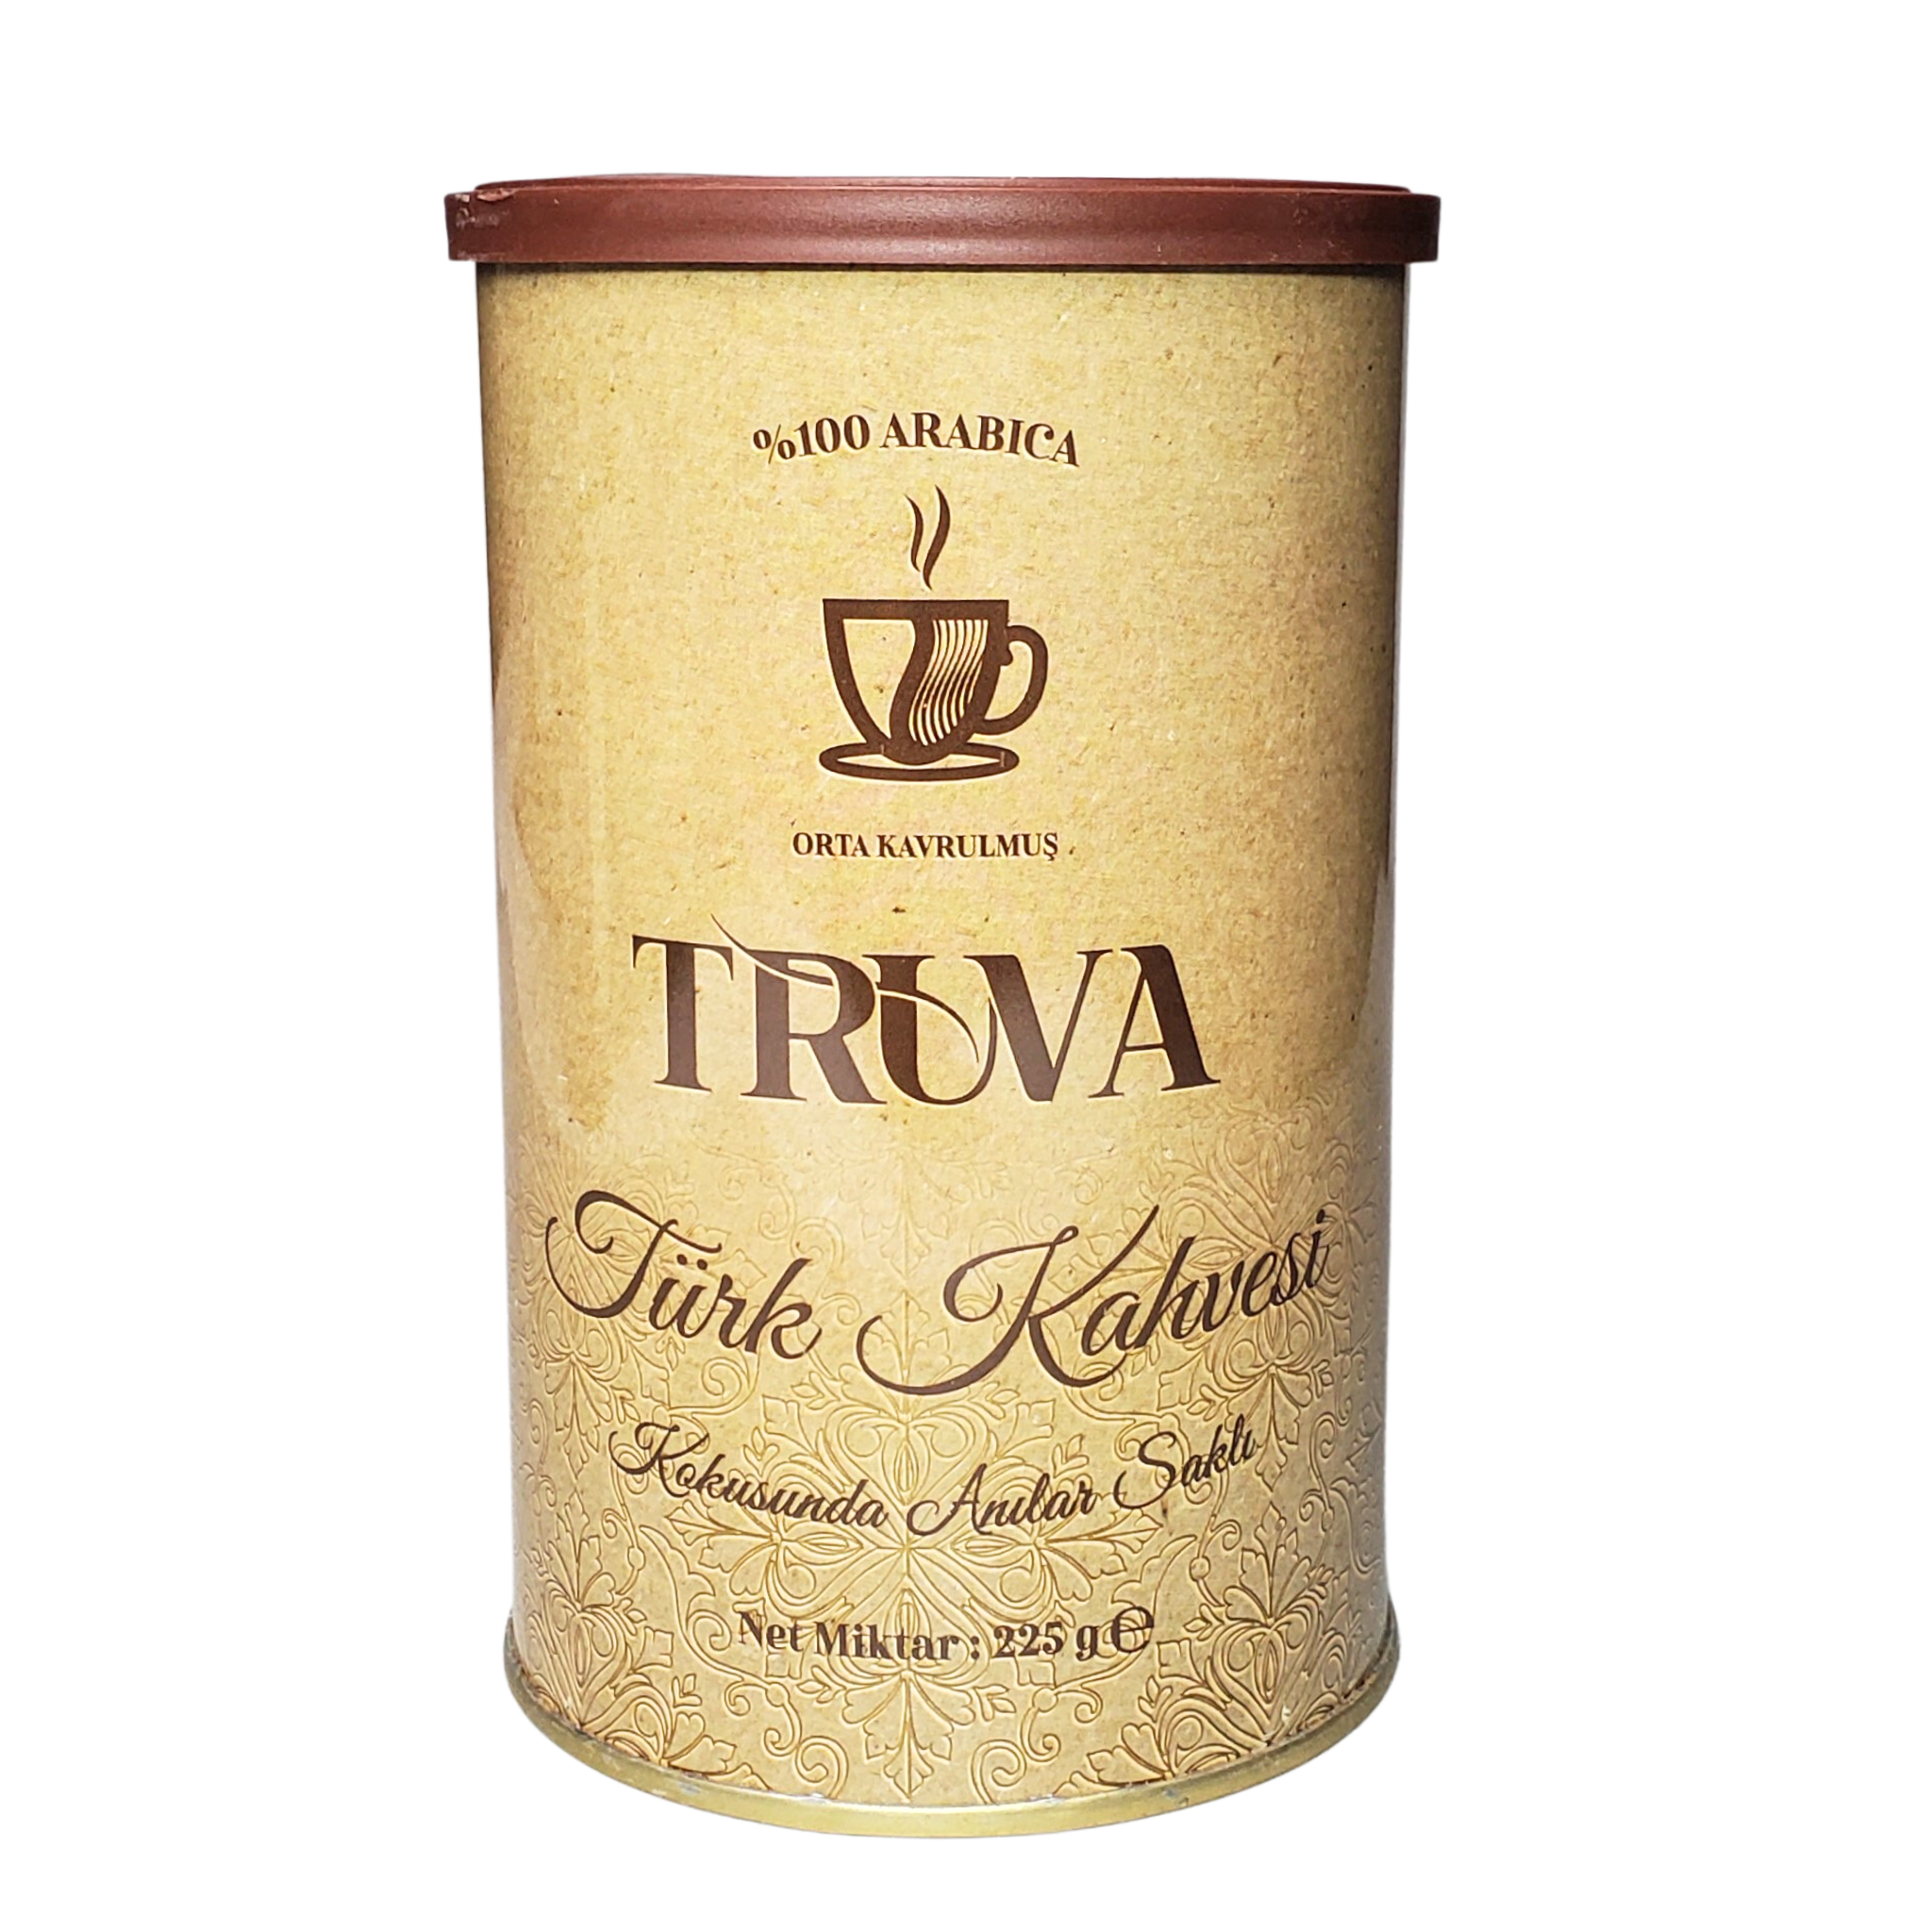 Truva Turkish Coffee 225g 100% Arabica - Turk Kahvesi Kakusunda Anular Sakle